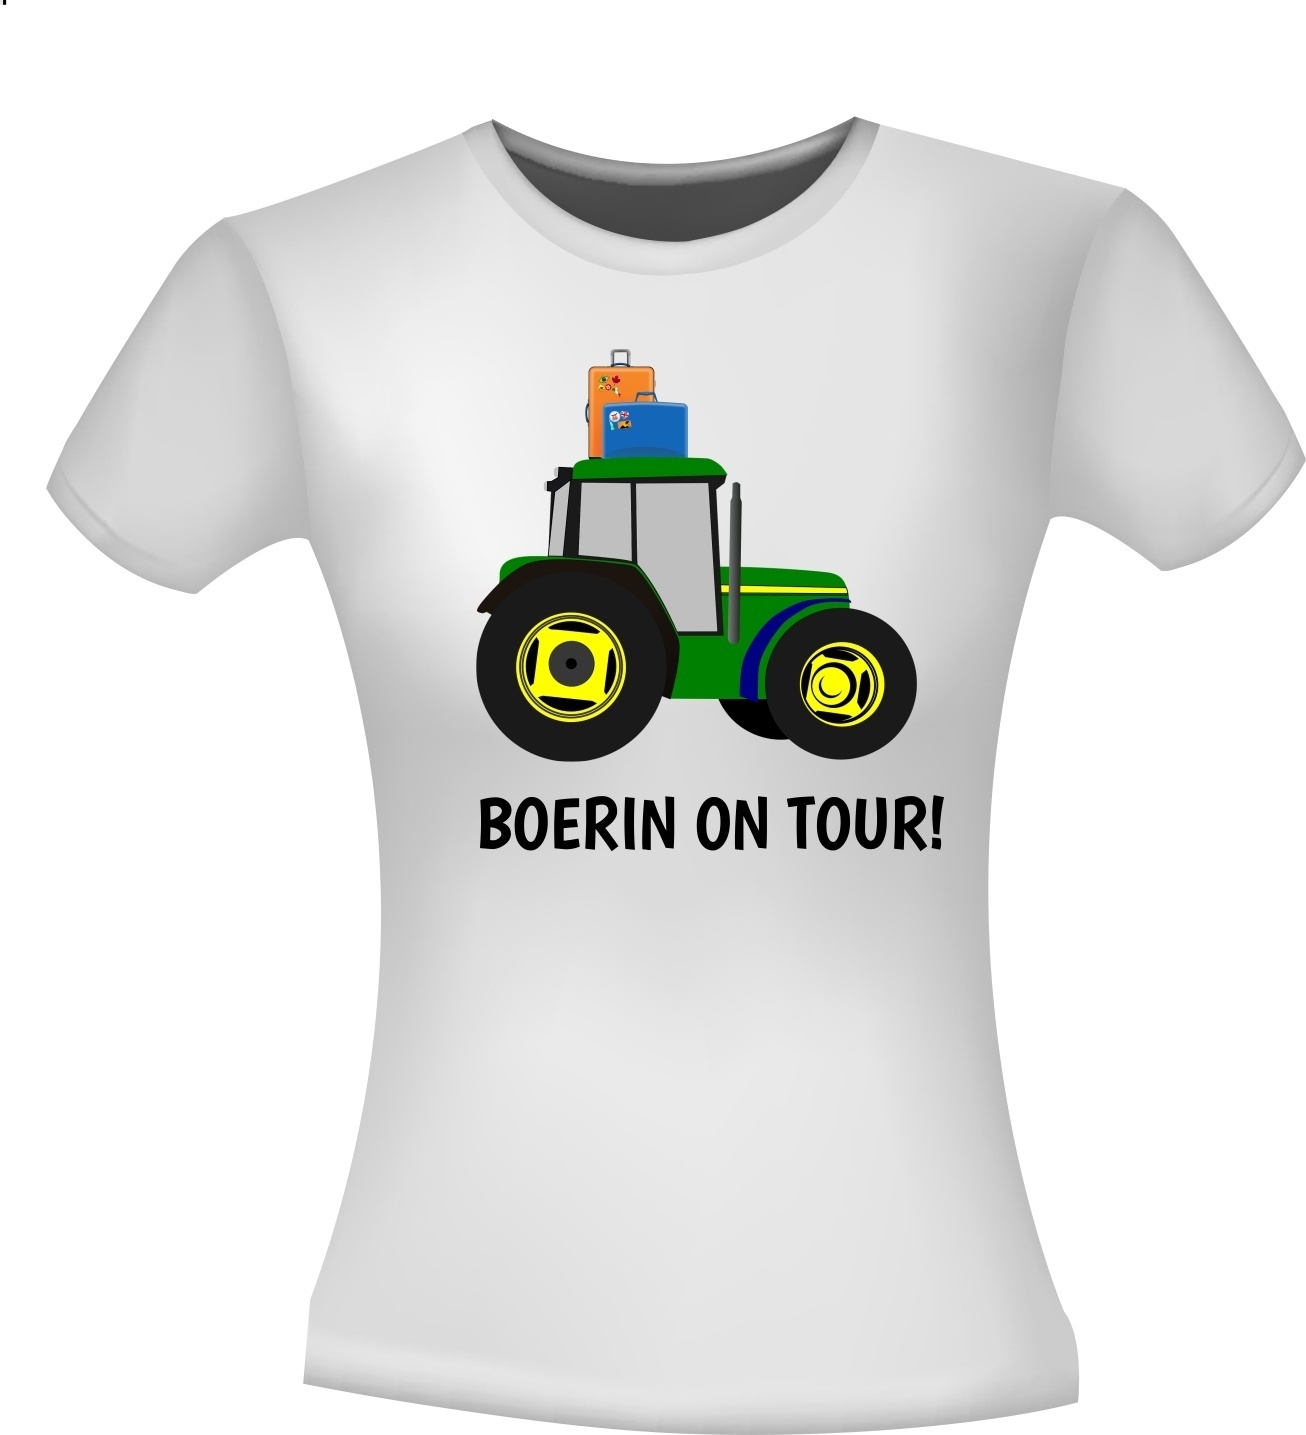 Boerin on tour T-shirt